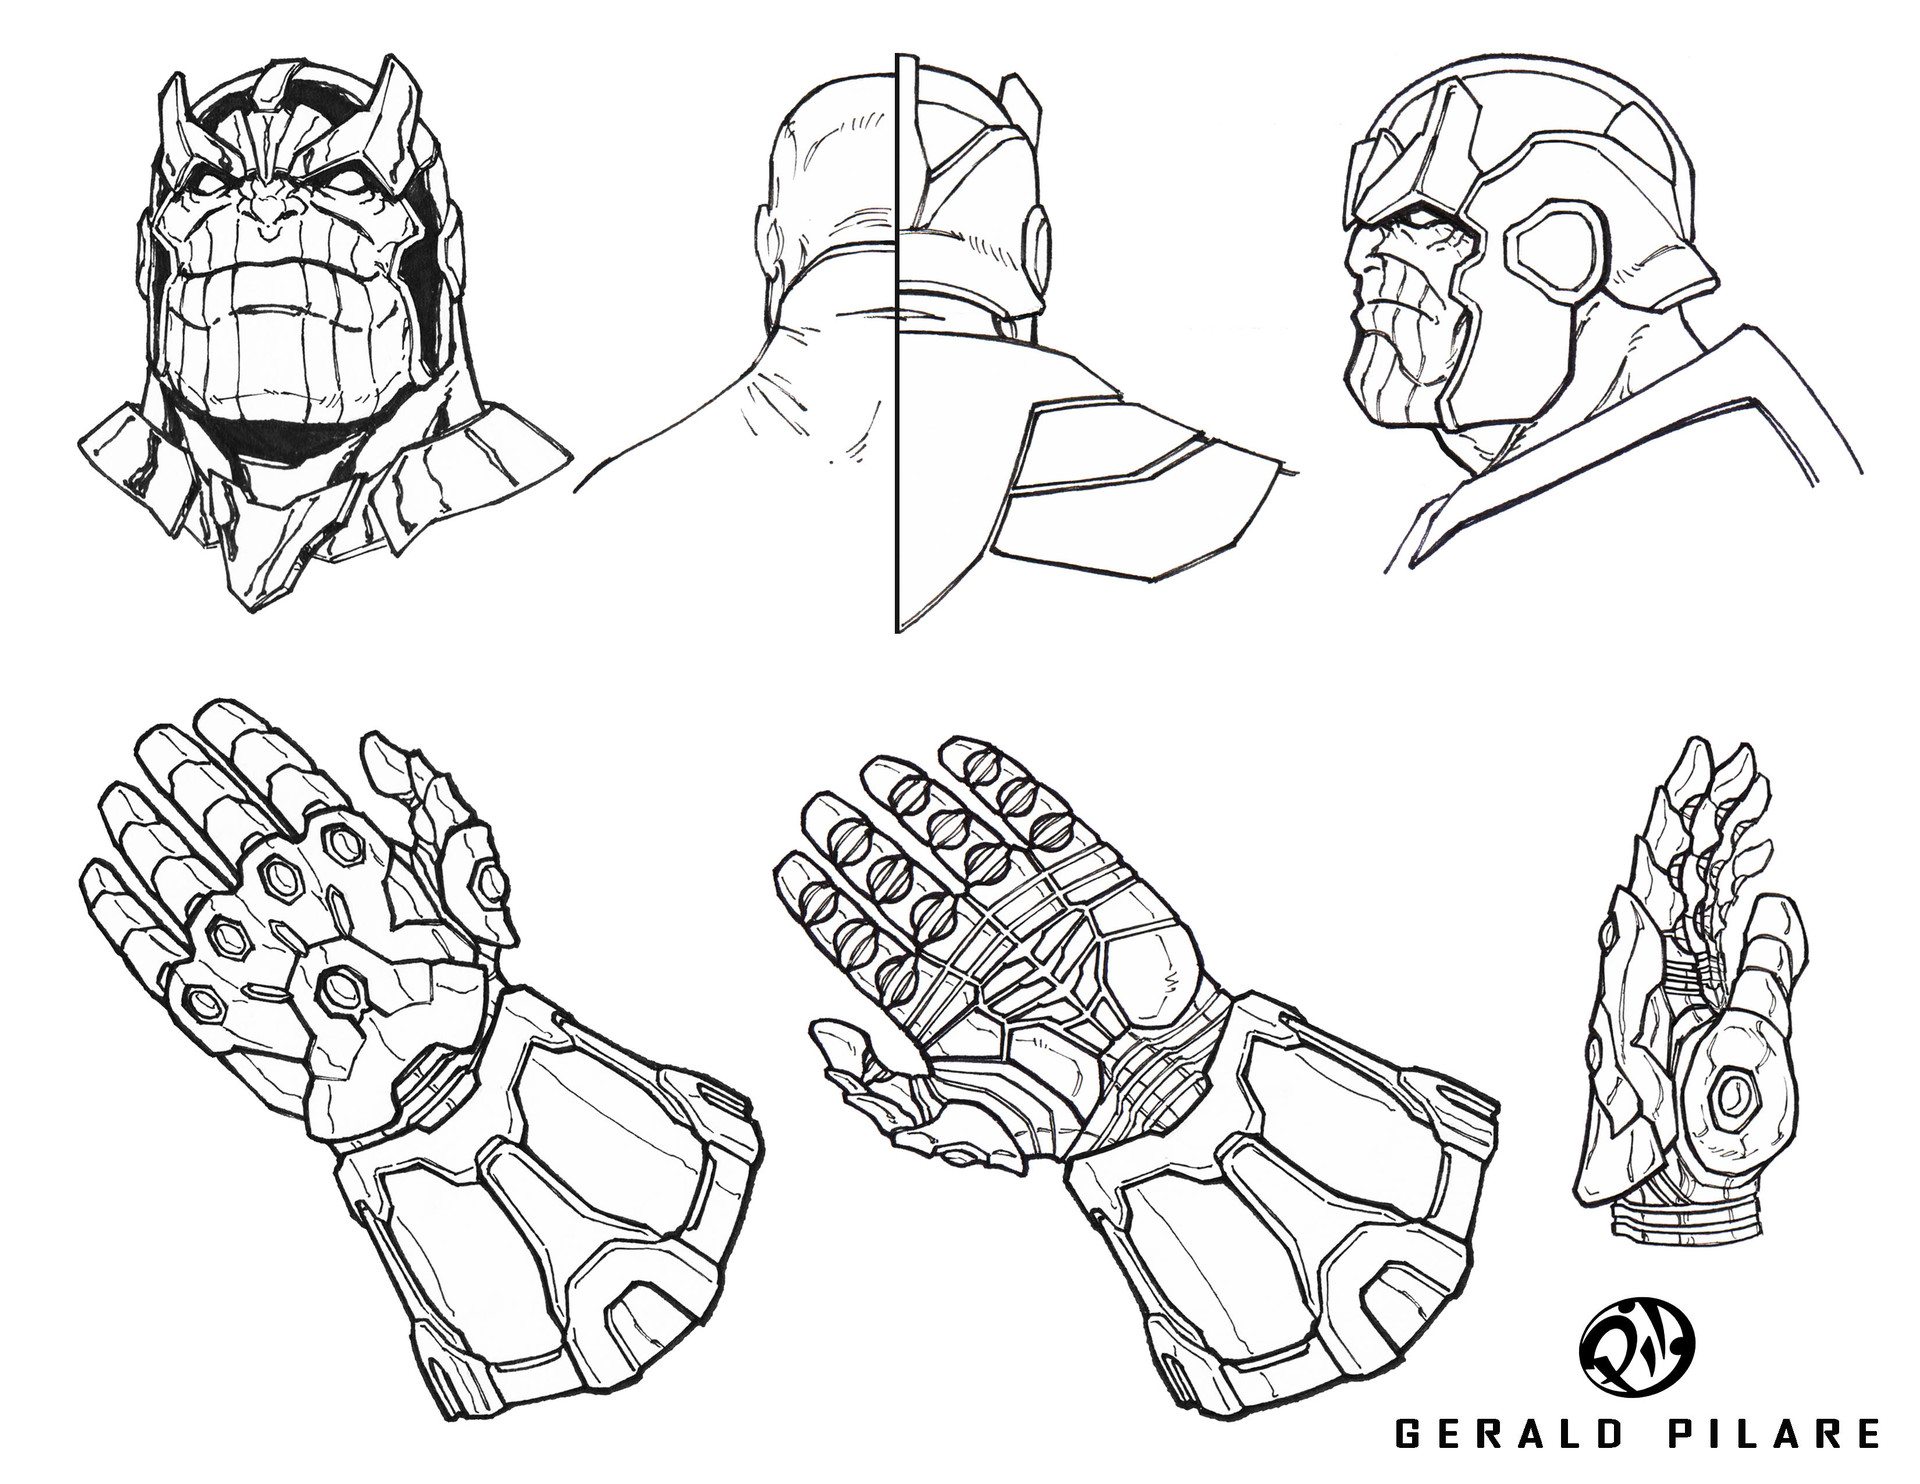 ArtStation - Thanos' headshot and the Infinity Gauntlet